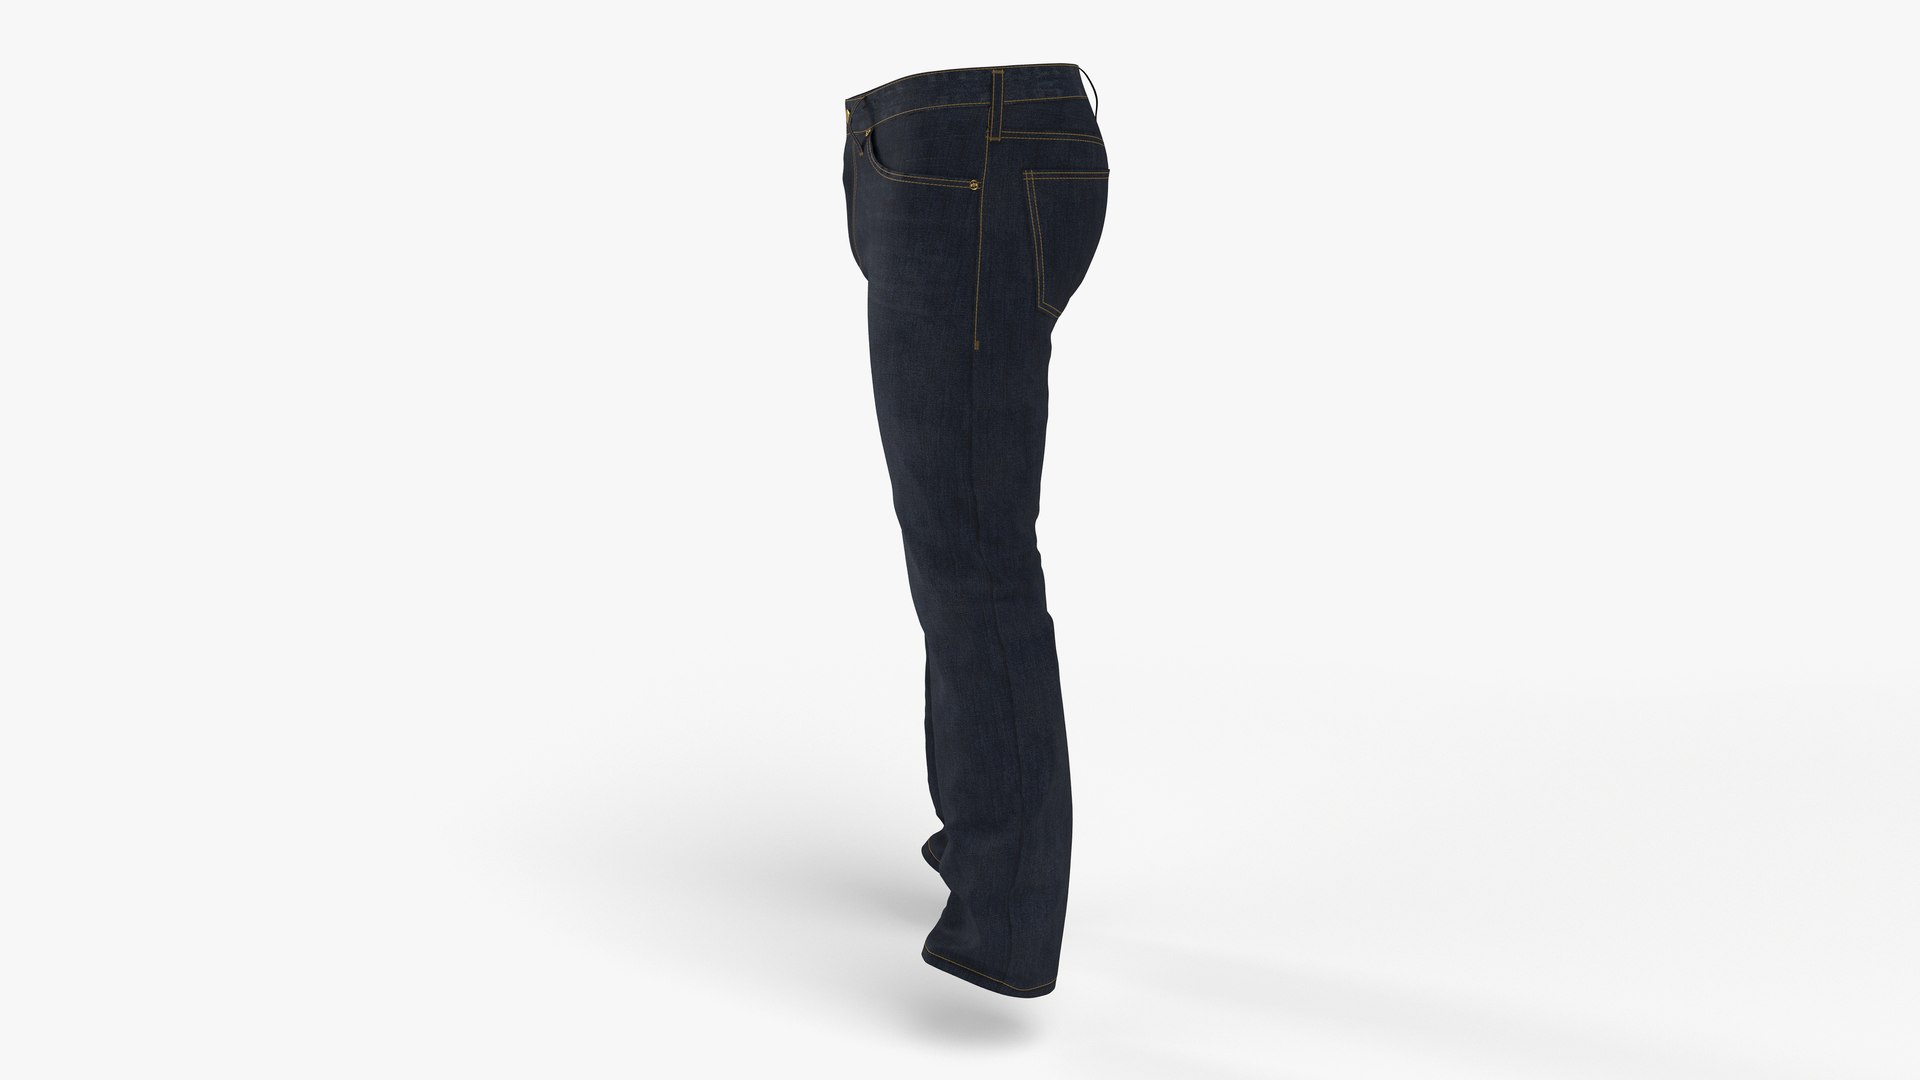 Realistic Worn Classic Jeans Male Body Shape Professional 3D Model ...